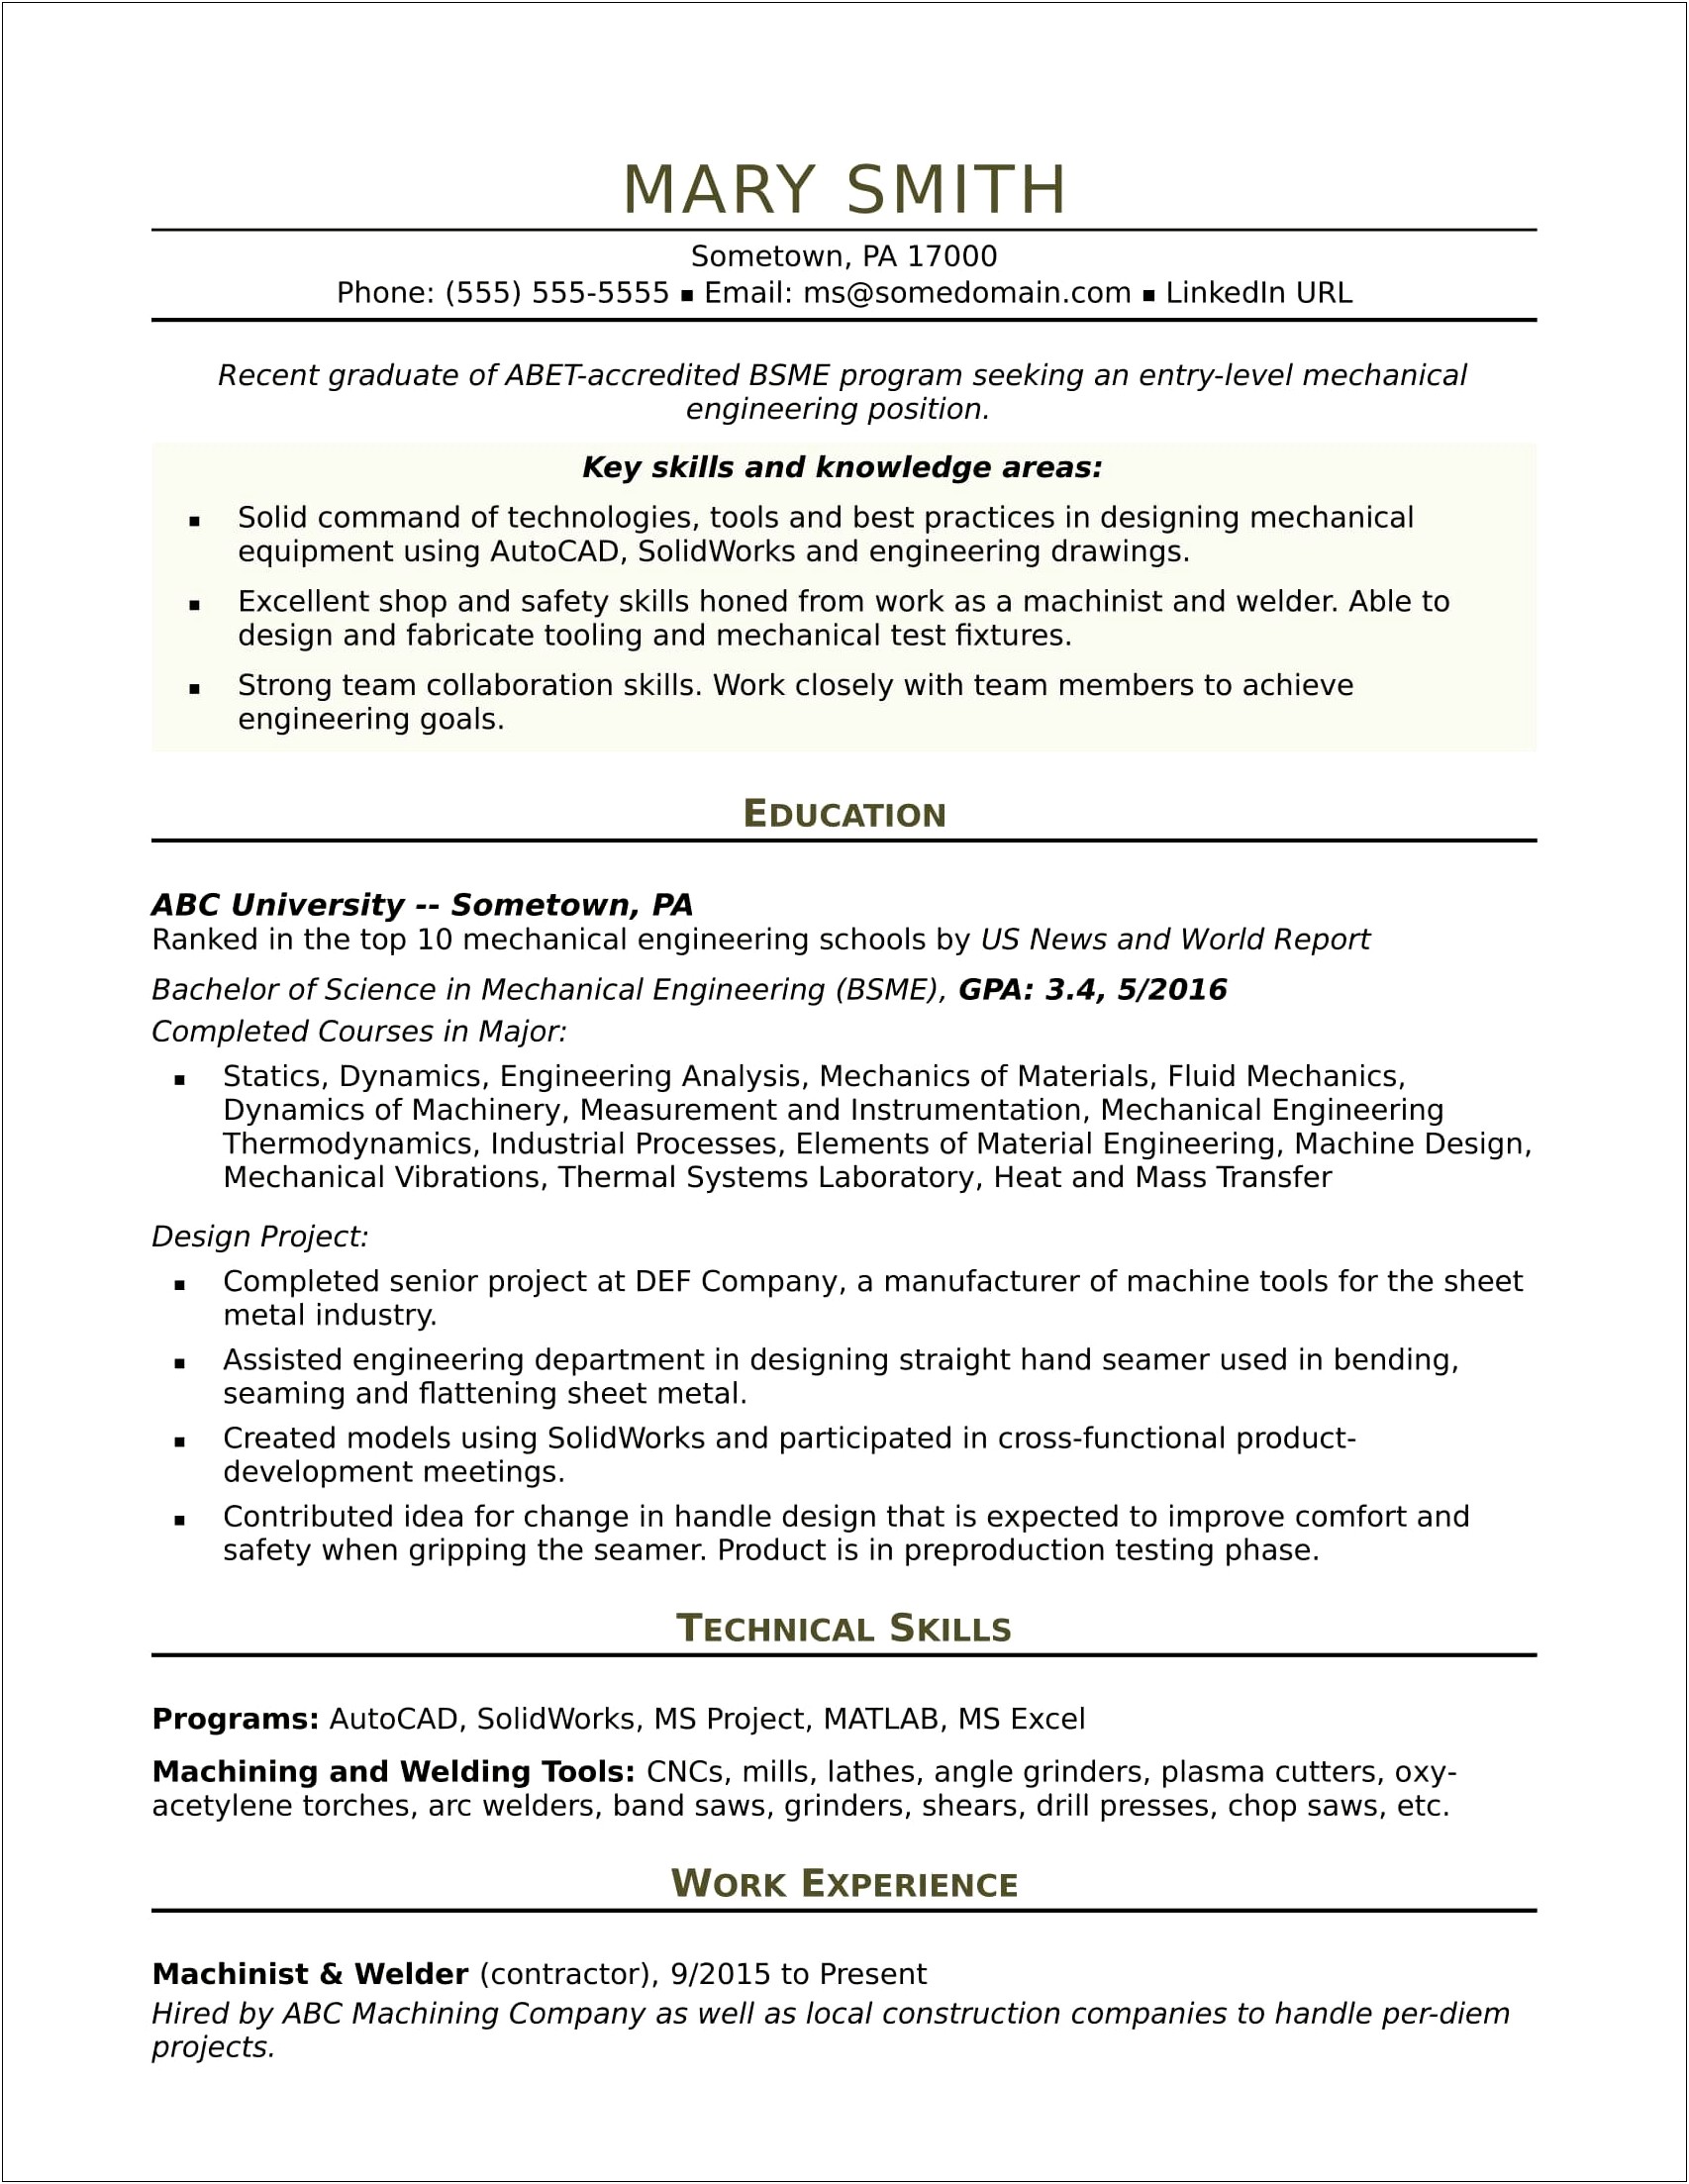 Resume Sample Professional Phd Level